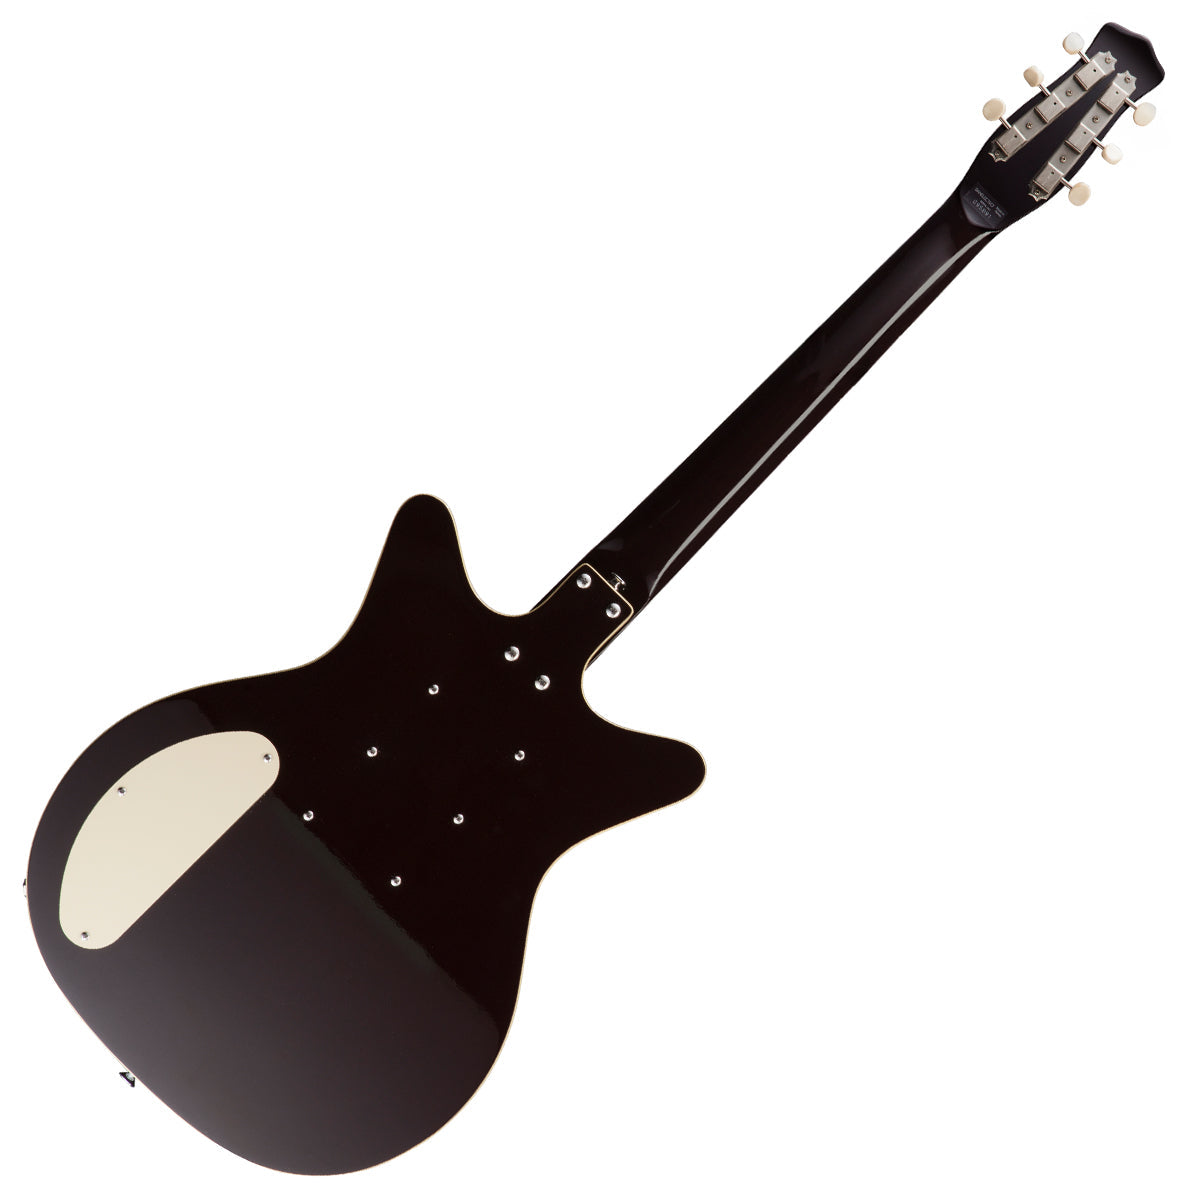 Danelectro Triple Divine Guitar ~ Black, Electric Guitar for sale at Richards Guitars.